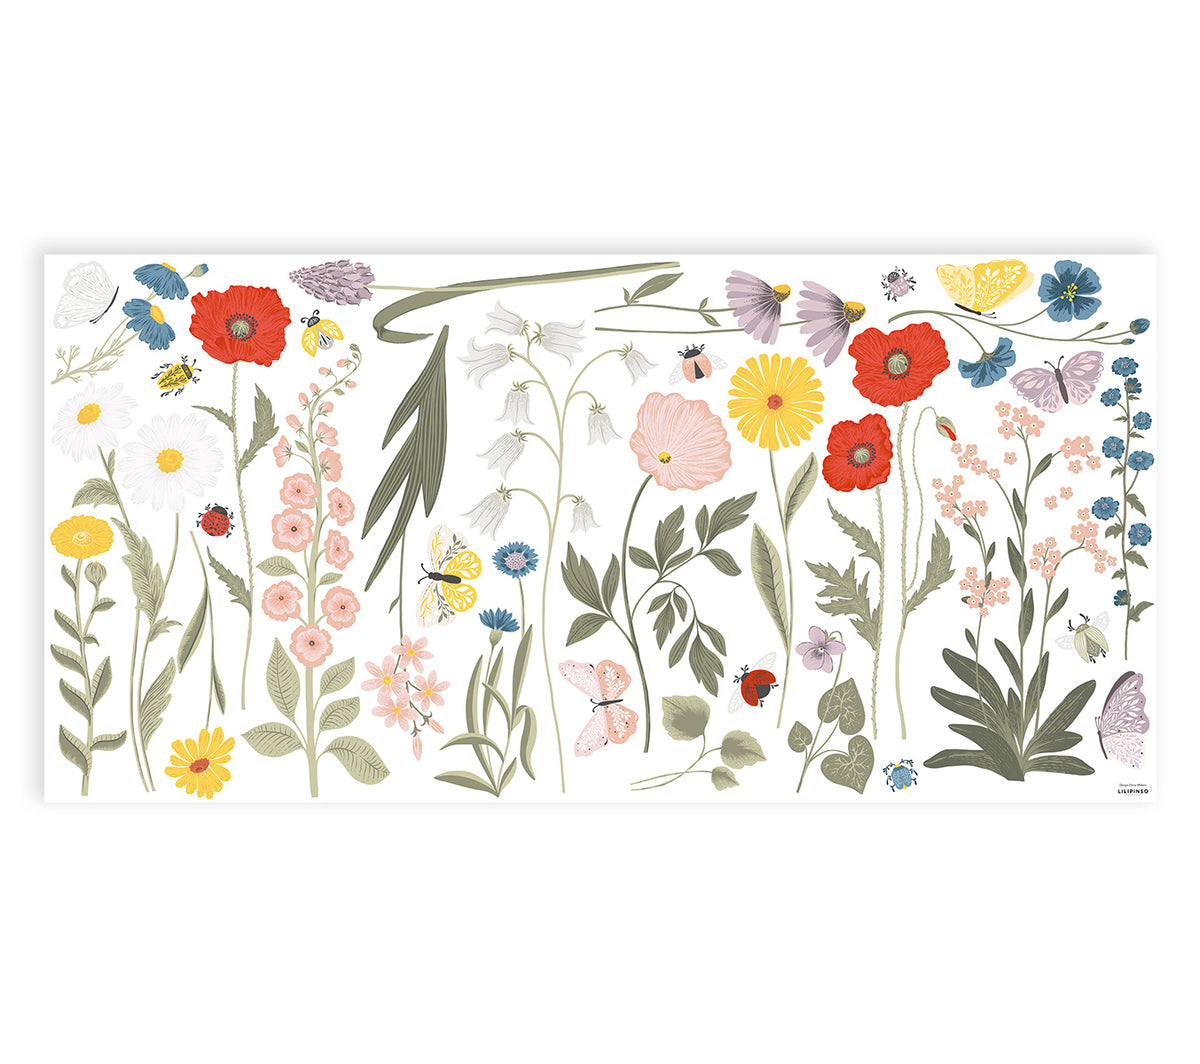 WILDFLOWERS - Wall decals murals - Large field flowers